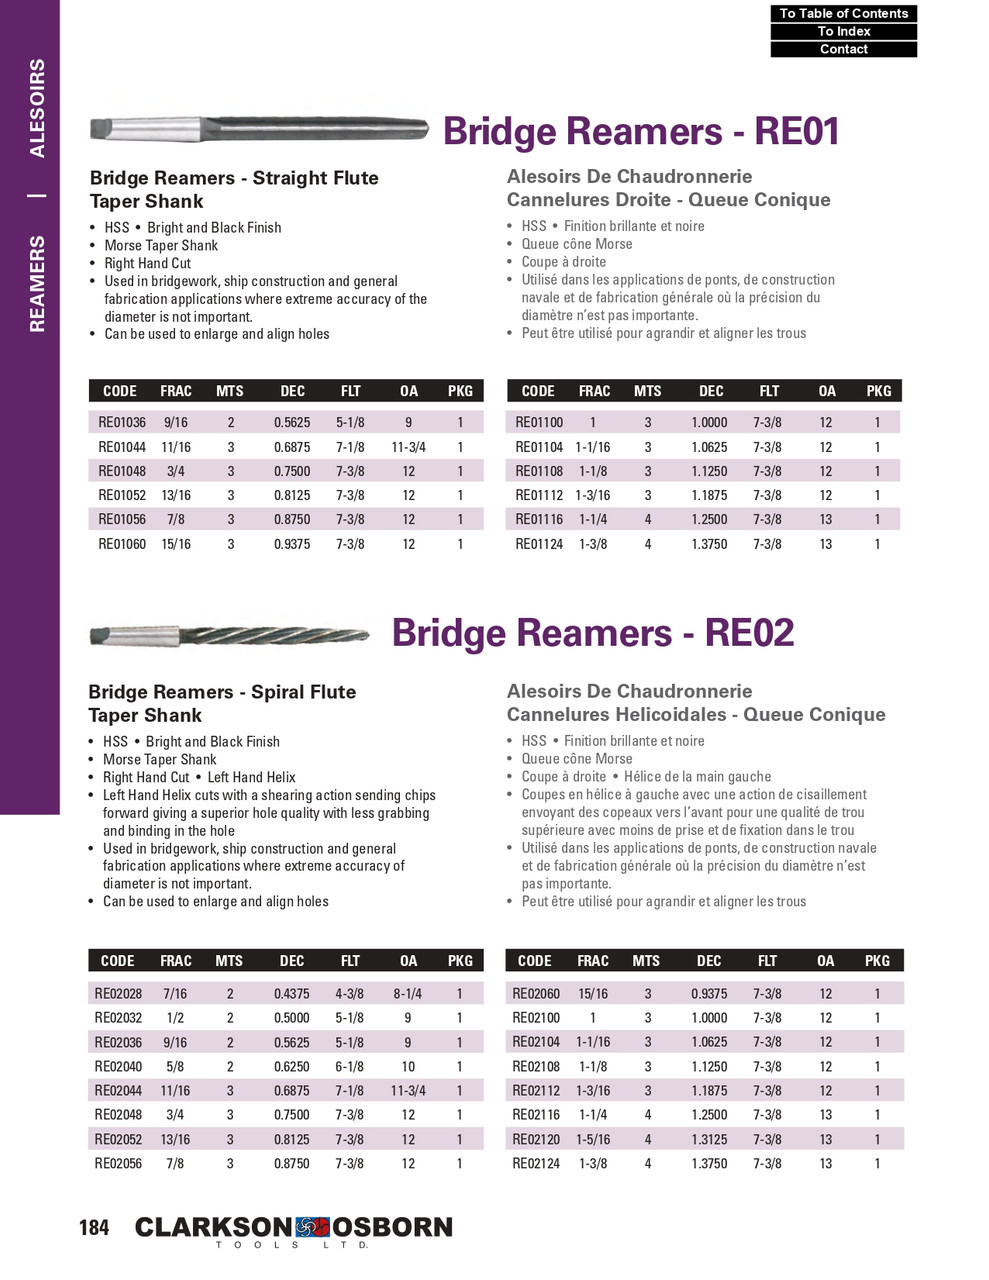 1-3/16" x #3 HSS Morse Taper Bridge Reamer   RE02112